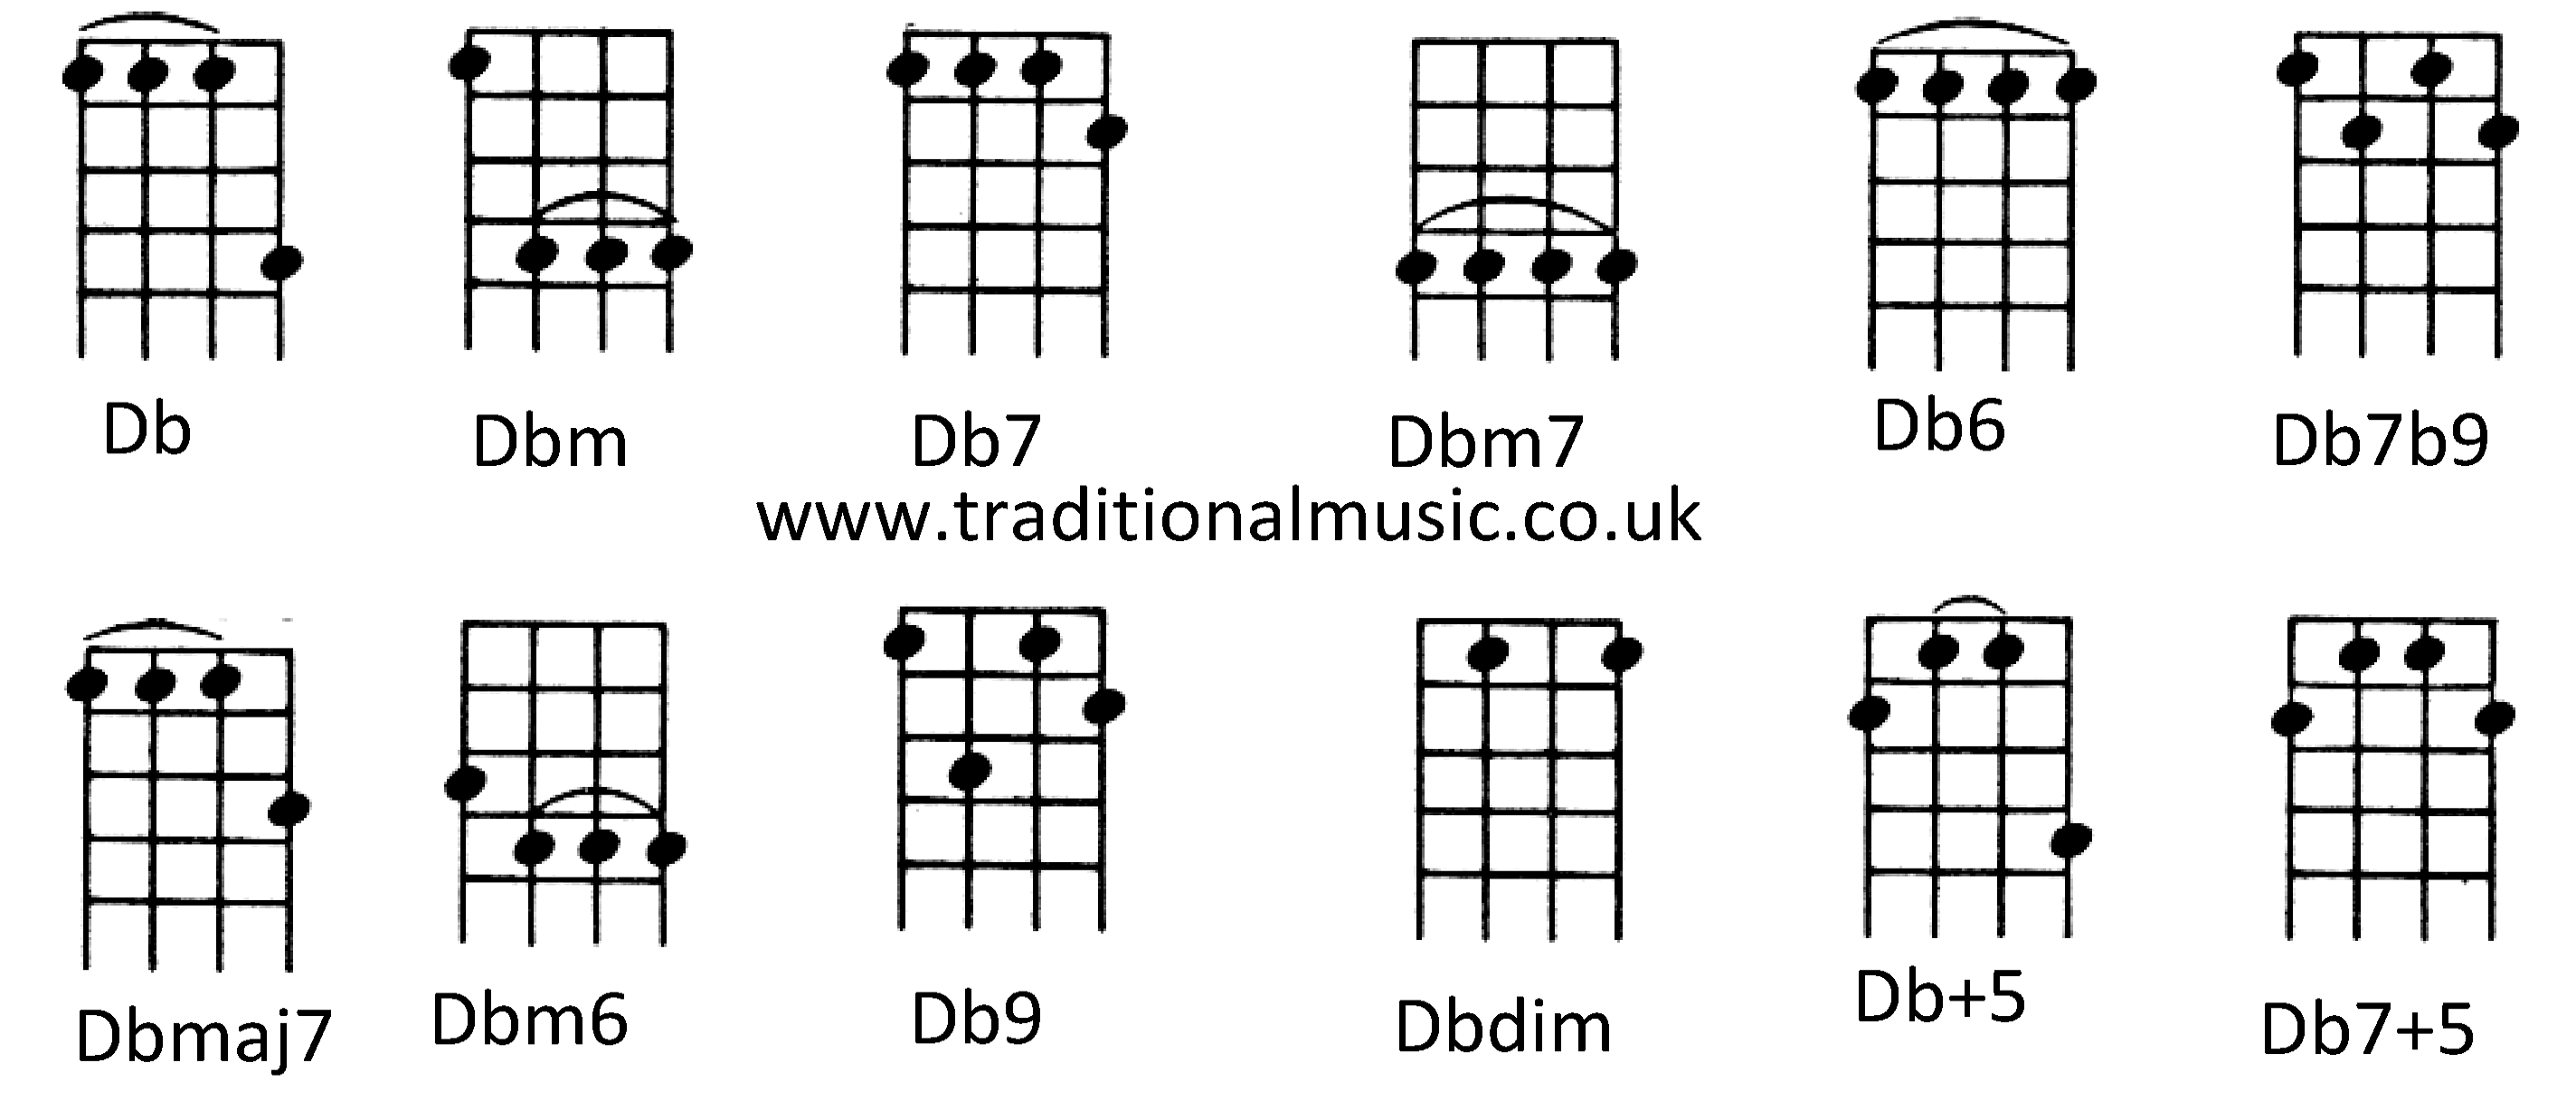 Chords for Ukulele (C tuning) Db Dbm Db7 Dbm7 Db6 Db7b9 Dbmaj7 Dbm6 Db9 Dbdim Db+5 Db7+5